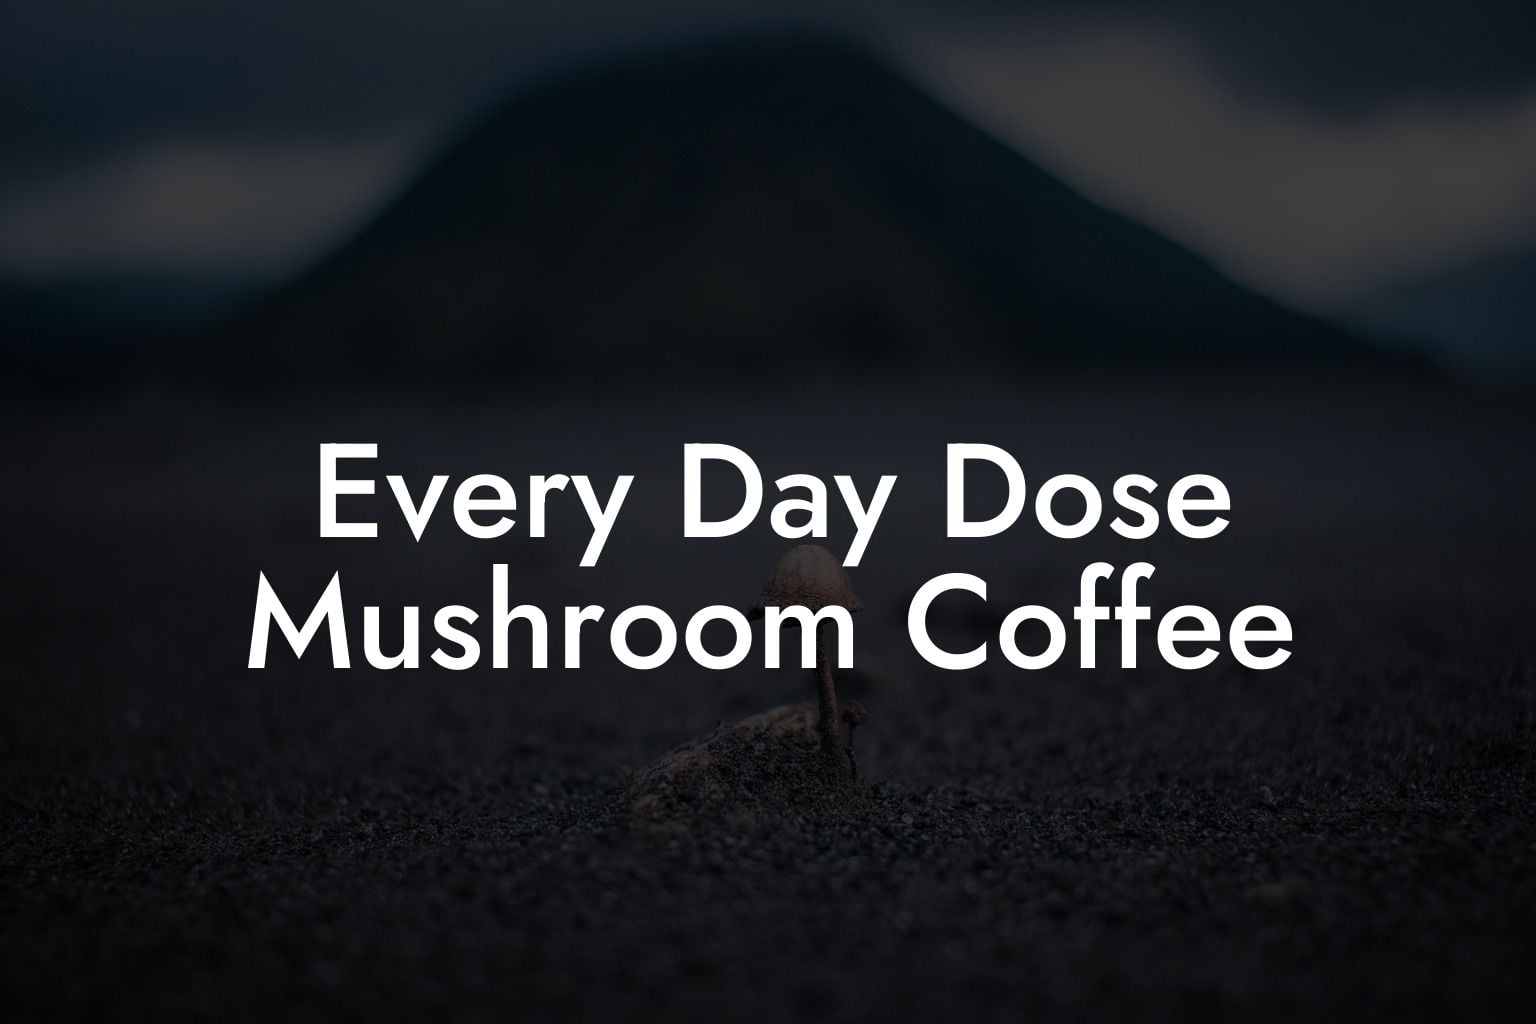 Every Day Dose Mushroom Coffee